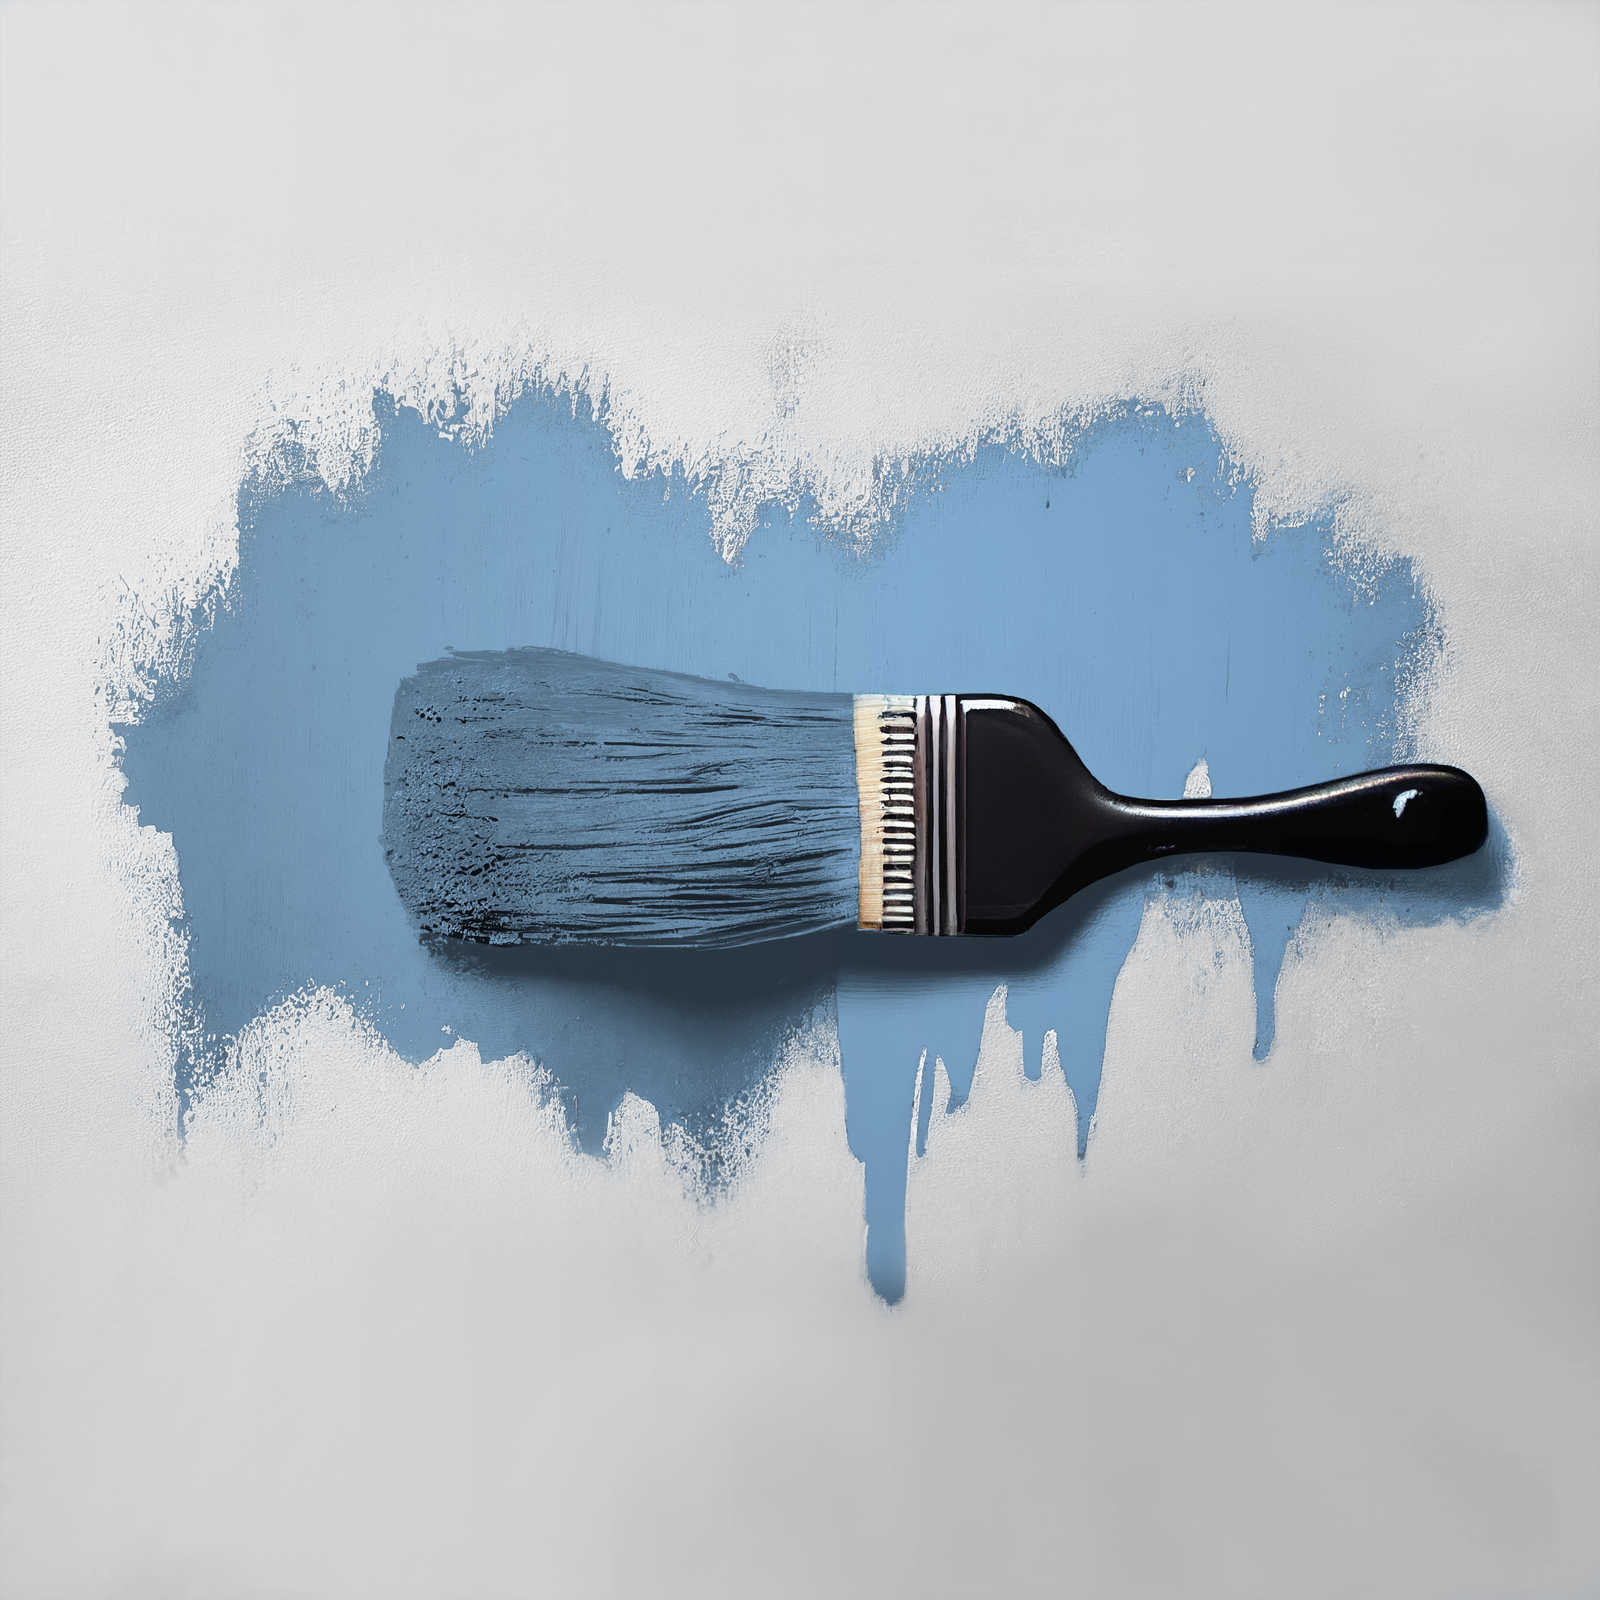             Pittura murale TCK3004 »Blue Herring« in blu tortora radioso – 2,5 litri
        